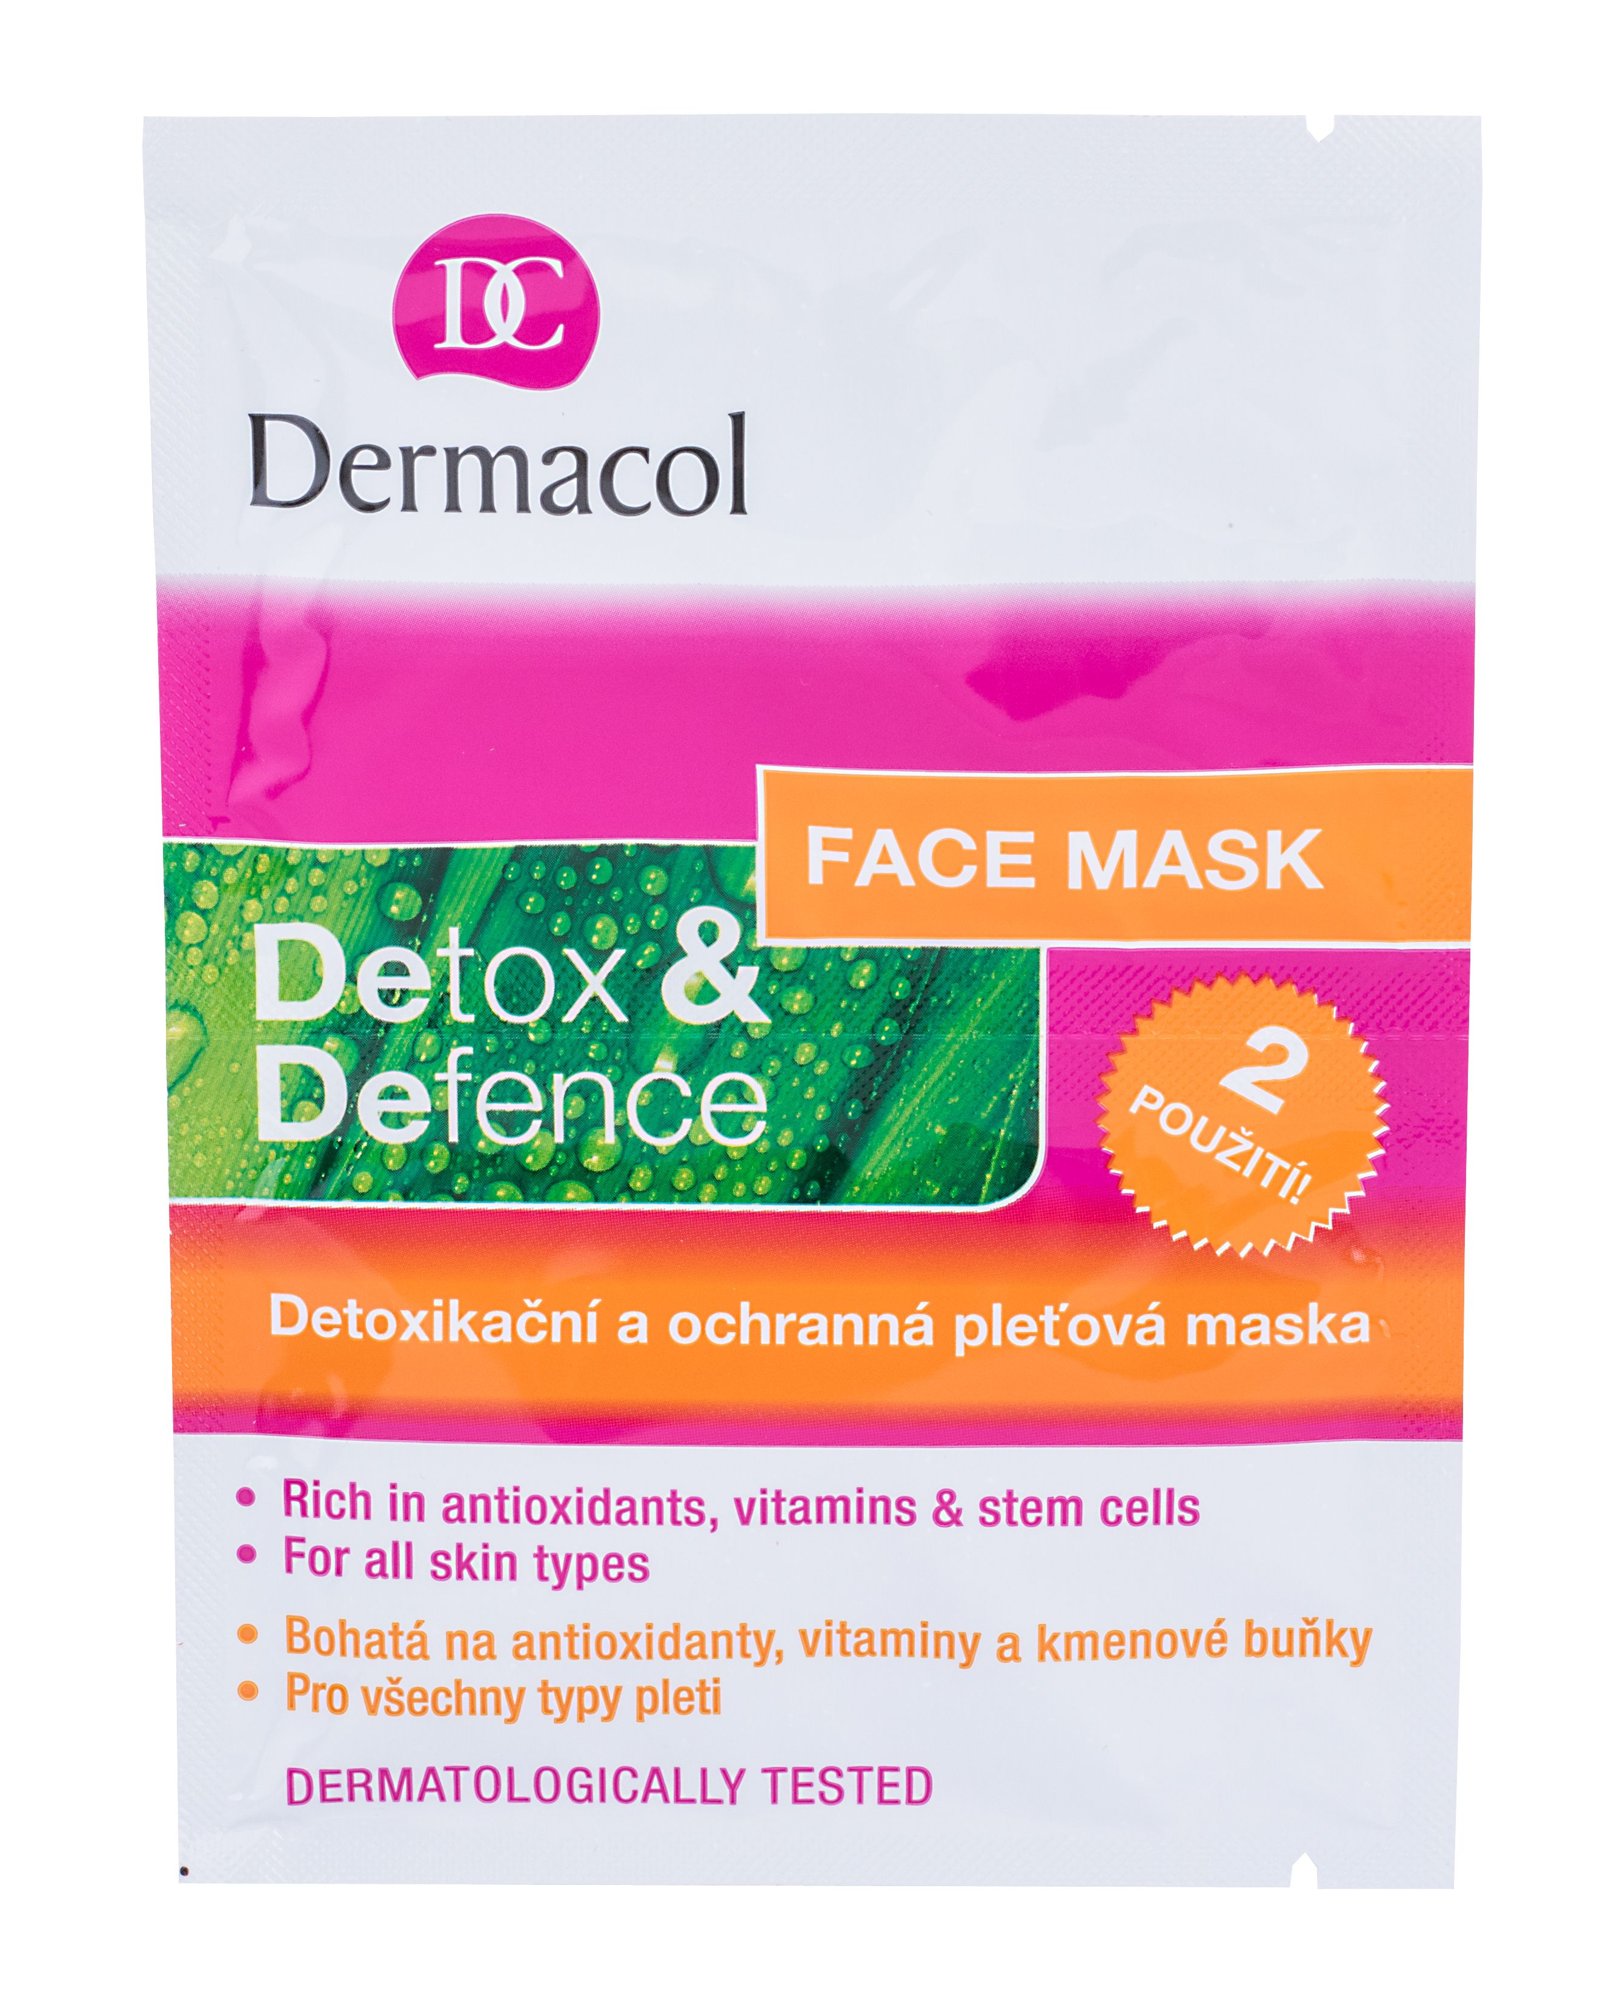 Dermacol Detox & Defence 16g Veido kaukė